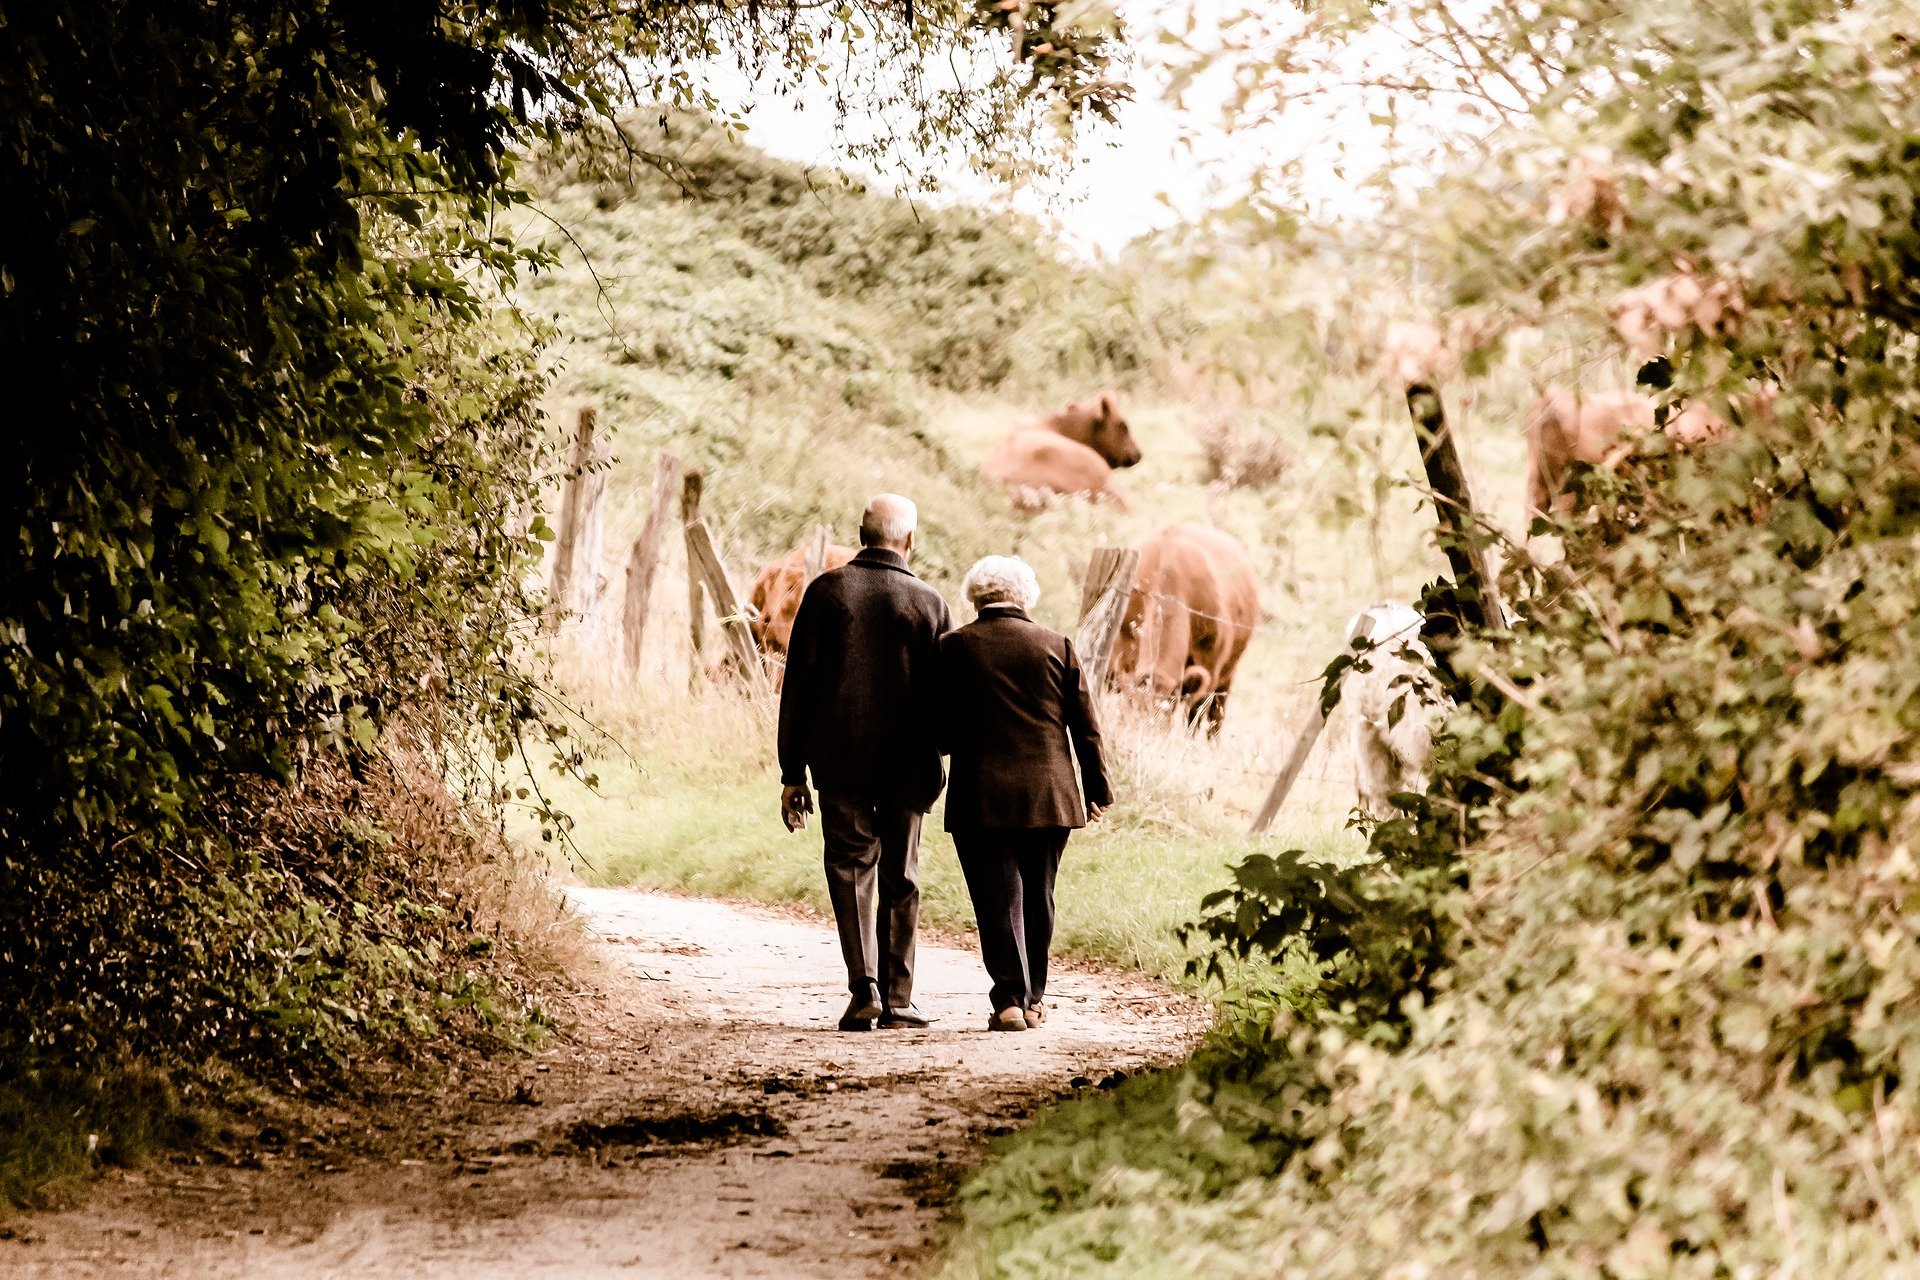 An elderly couple walking towards a grassy area. | Source: Pixabay